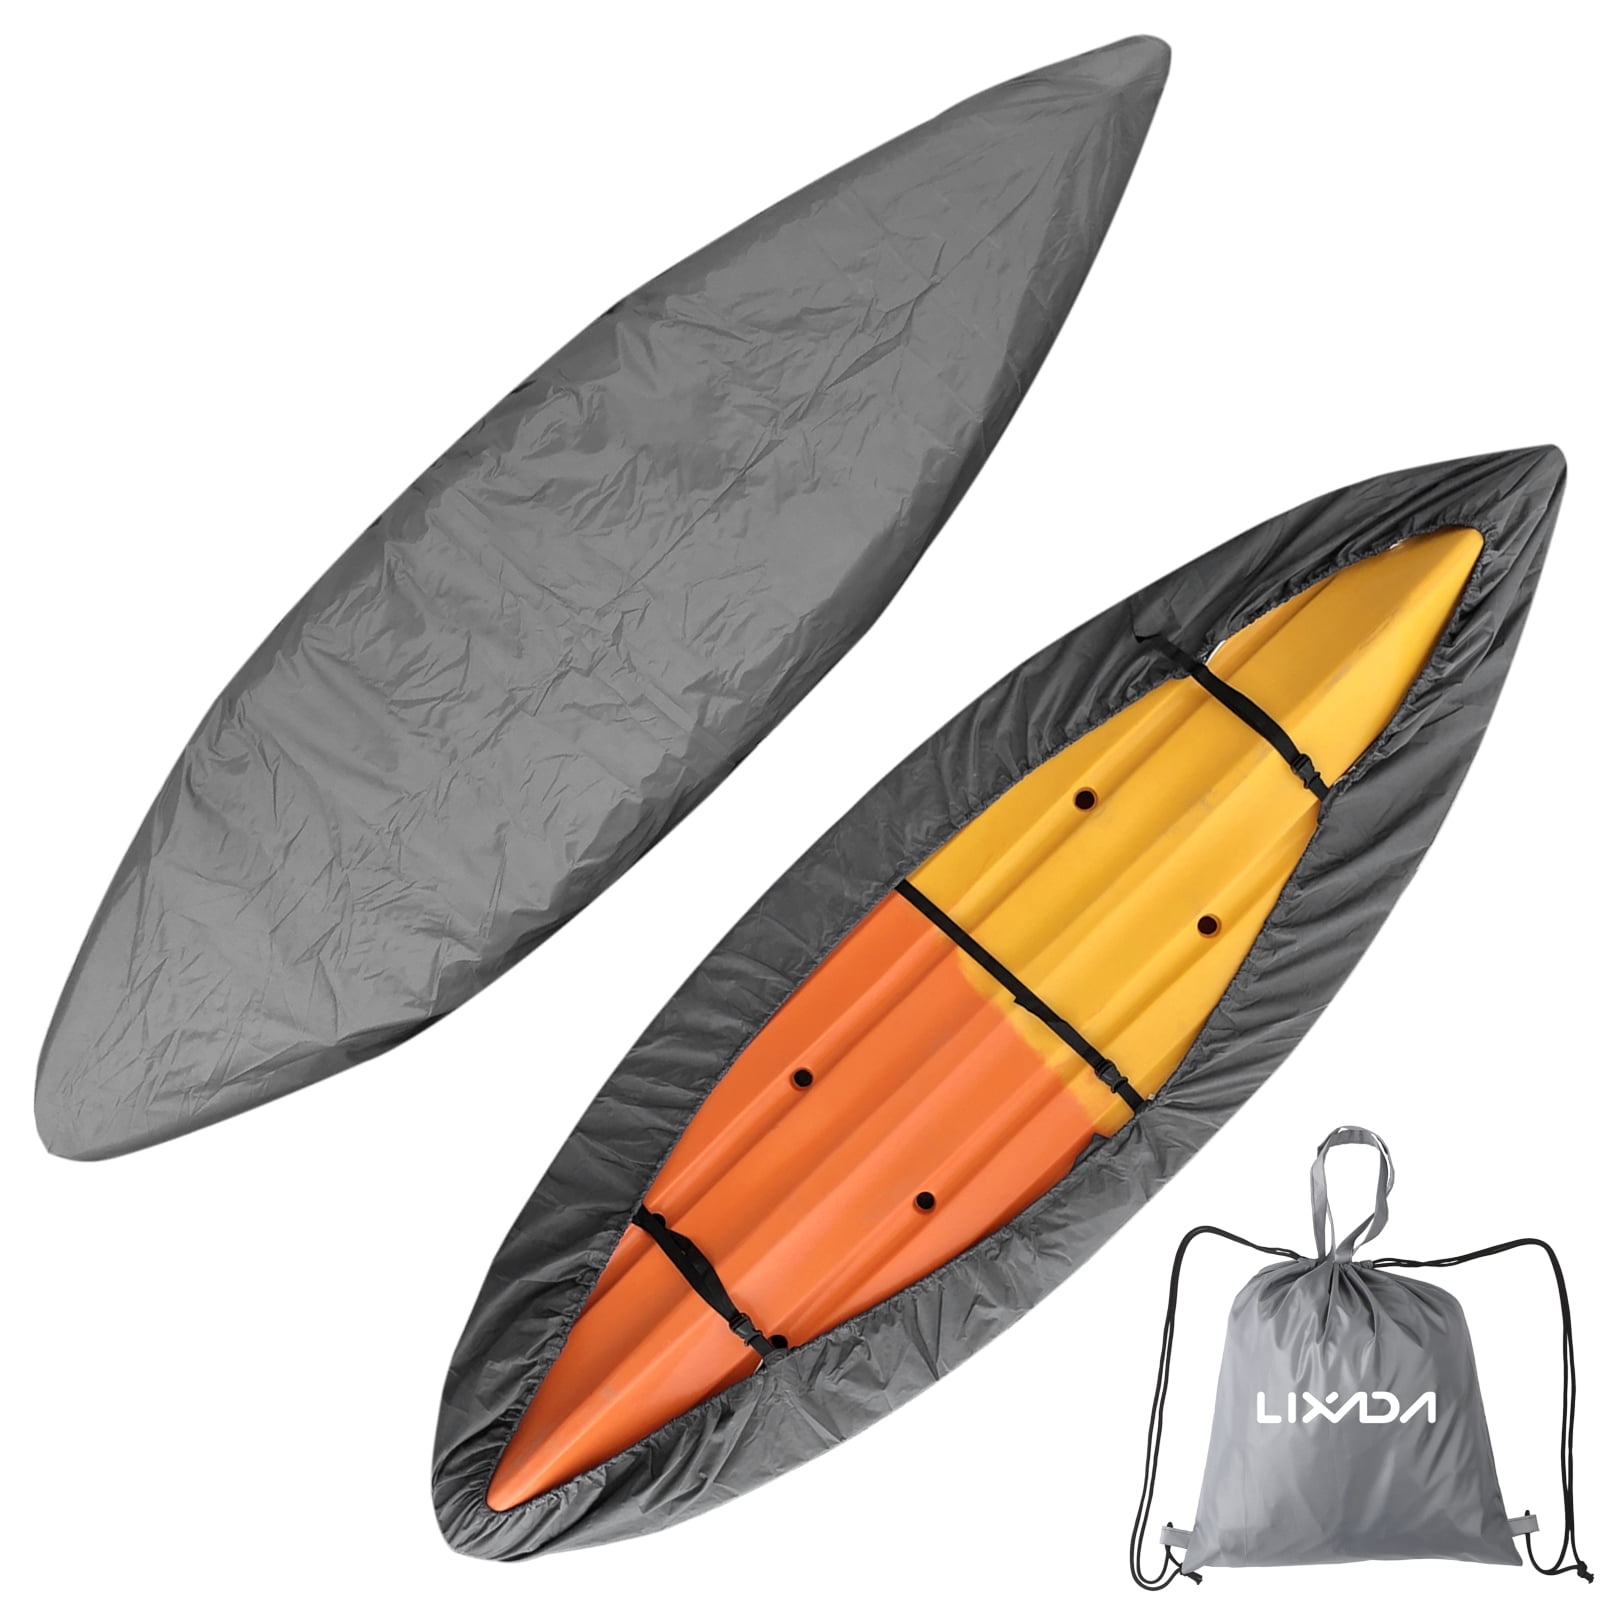 Waterproof Kayak Storage Cover 4.5m Kayak Canoe Sunblock Shield Protector Covers Boat UV Sun Protection Storage Dust Cover for 11.8-13.1ft Kayak Boat Canoe